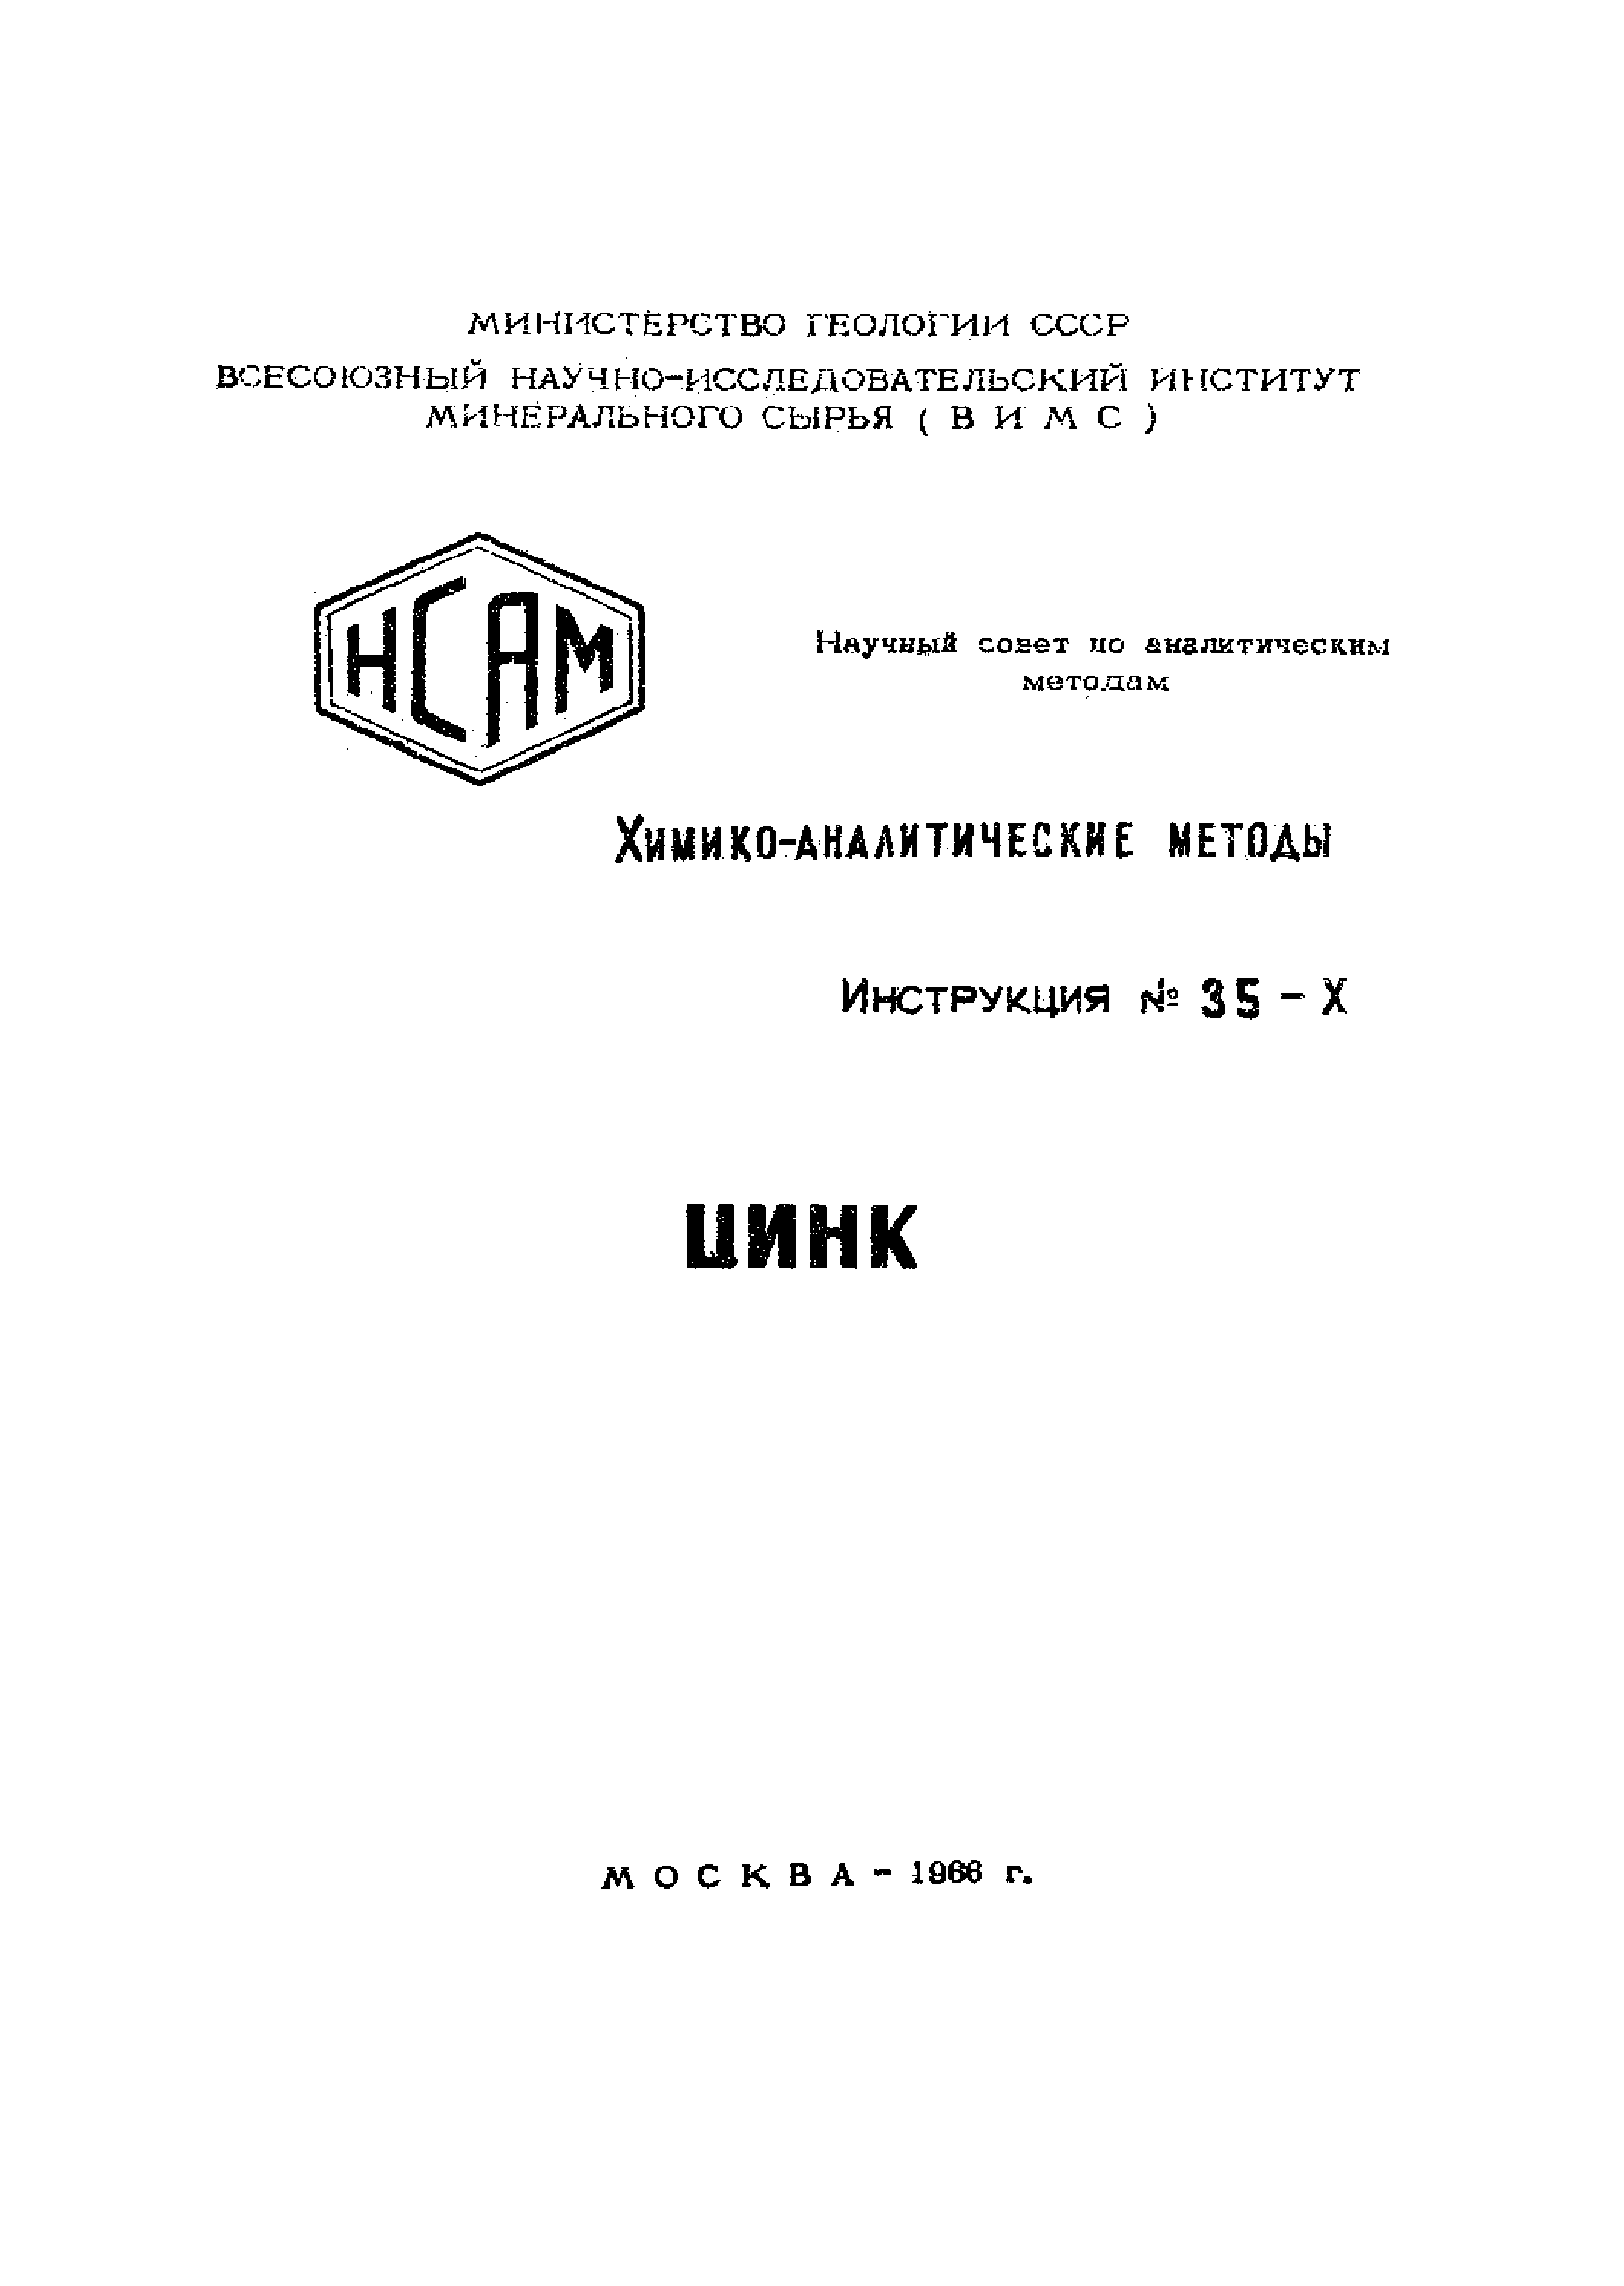 Инструкция НСАМ 35-Х